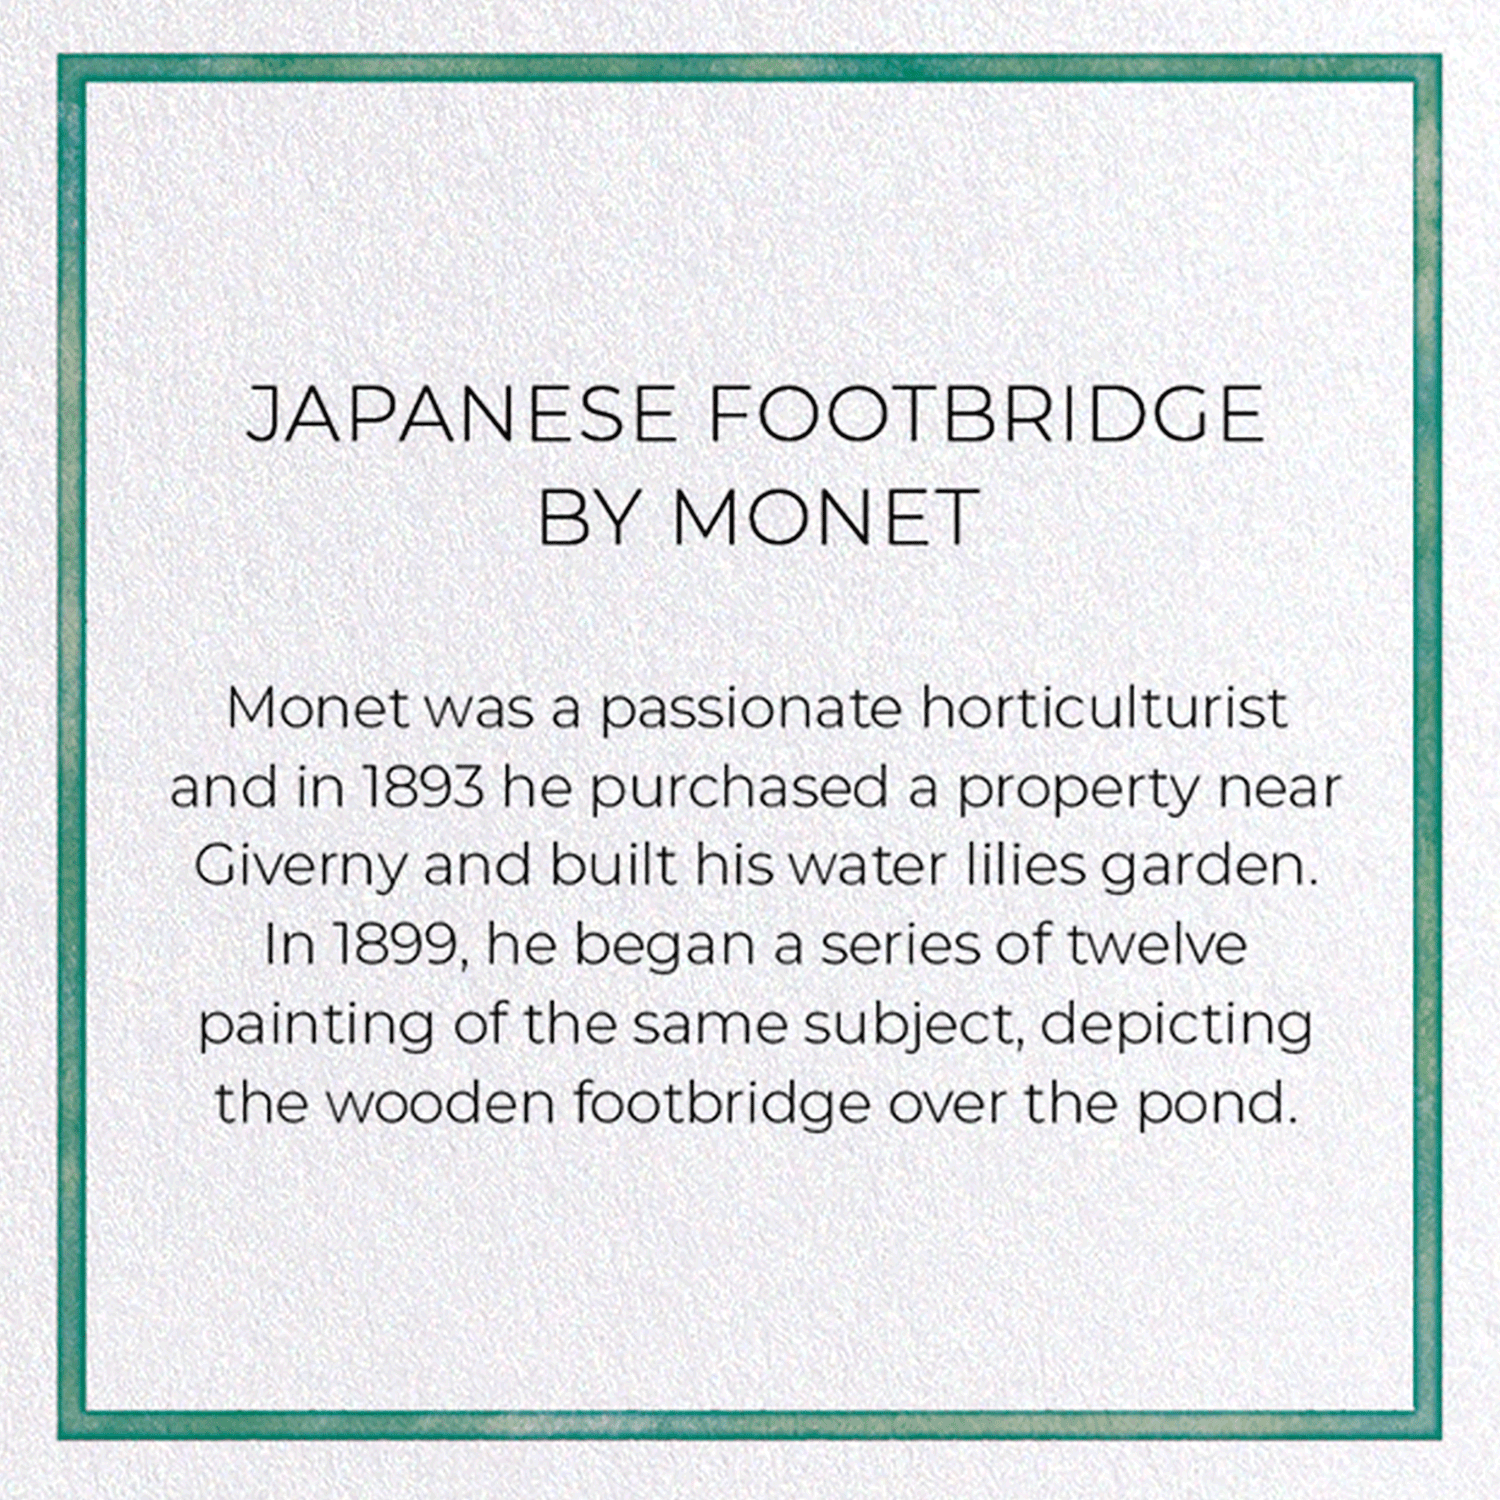 JAPANESE FOOTBRIDGE BY MONET